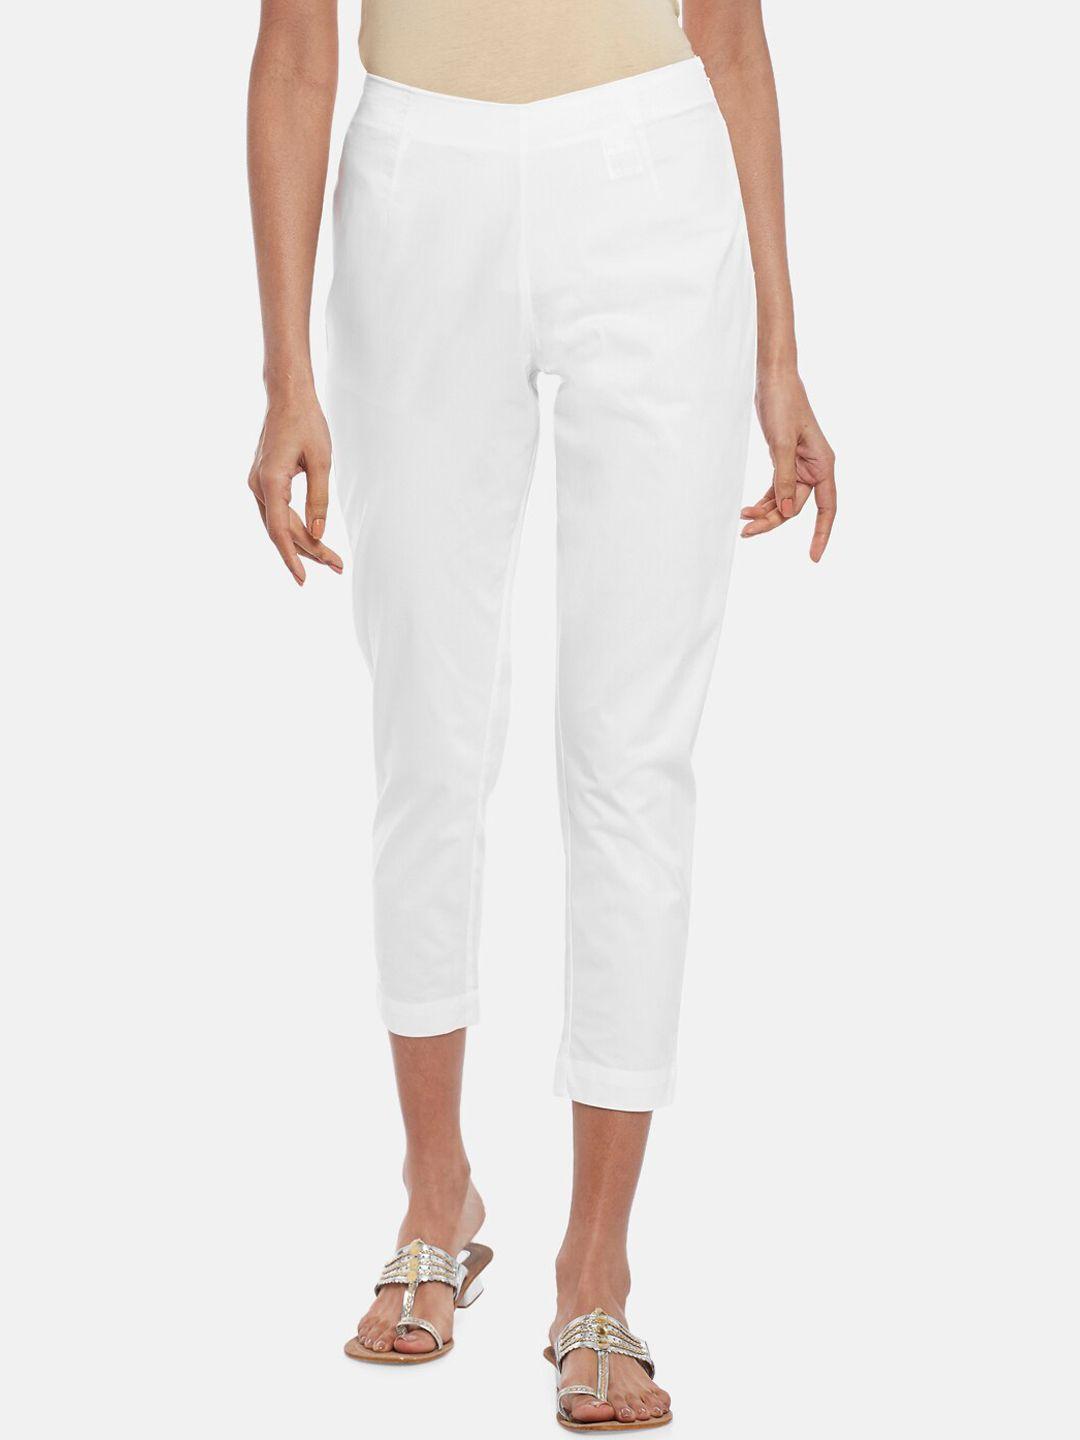 rangmanch by pantaloons women white printed pure cotton trousers